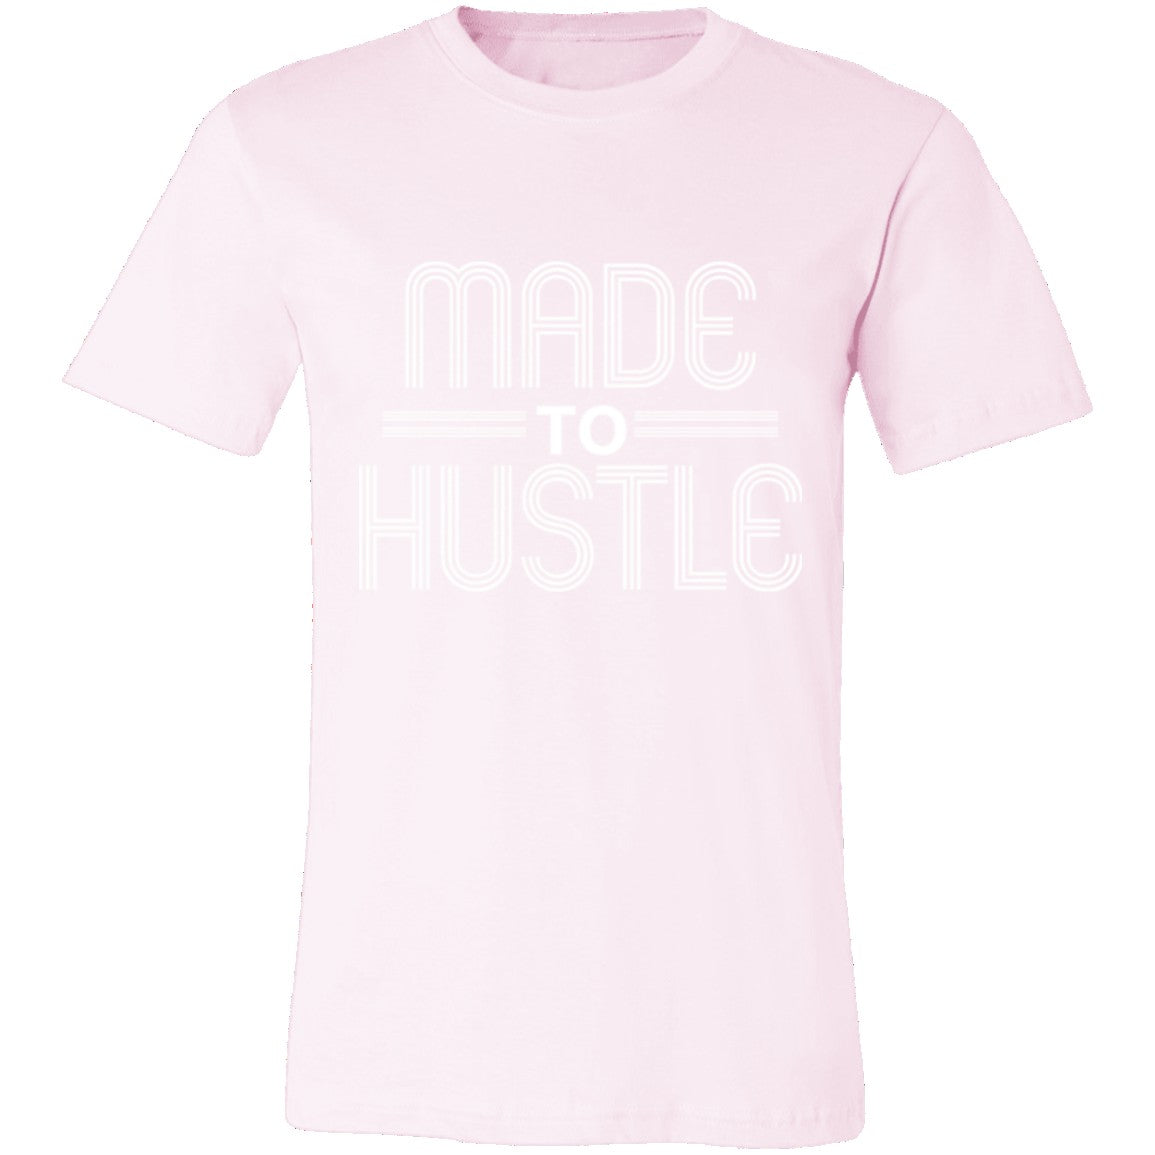 Made to Hustle Unisex Jersey Short-Sleeve T-Shirt freeshipping - Bedroka Streetwear LLC